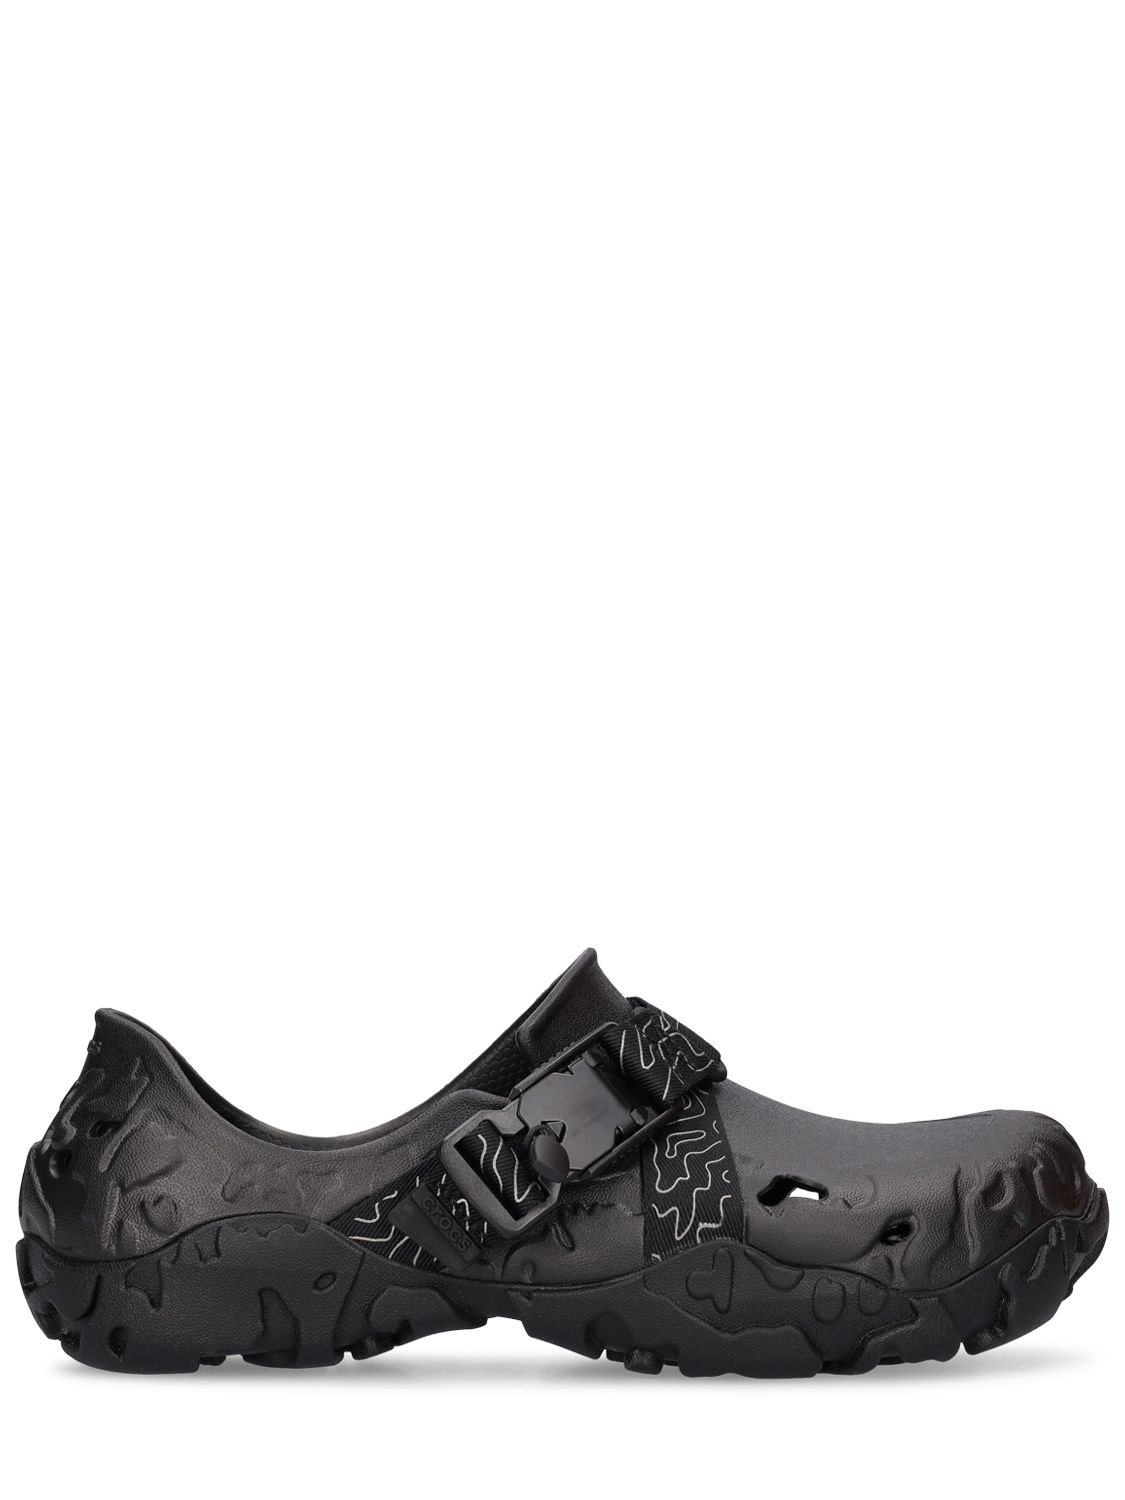 Crocs Atlas Shoes In Black